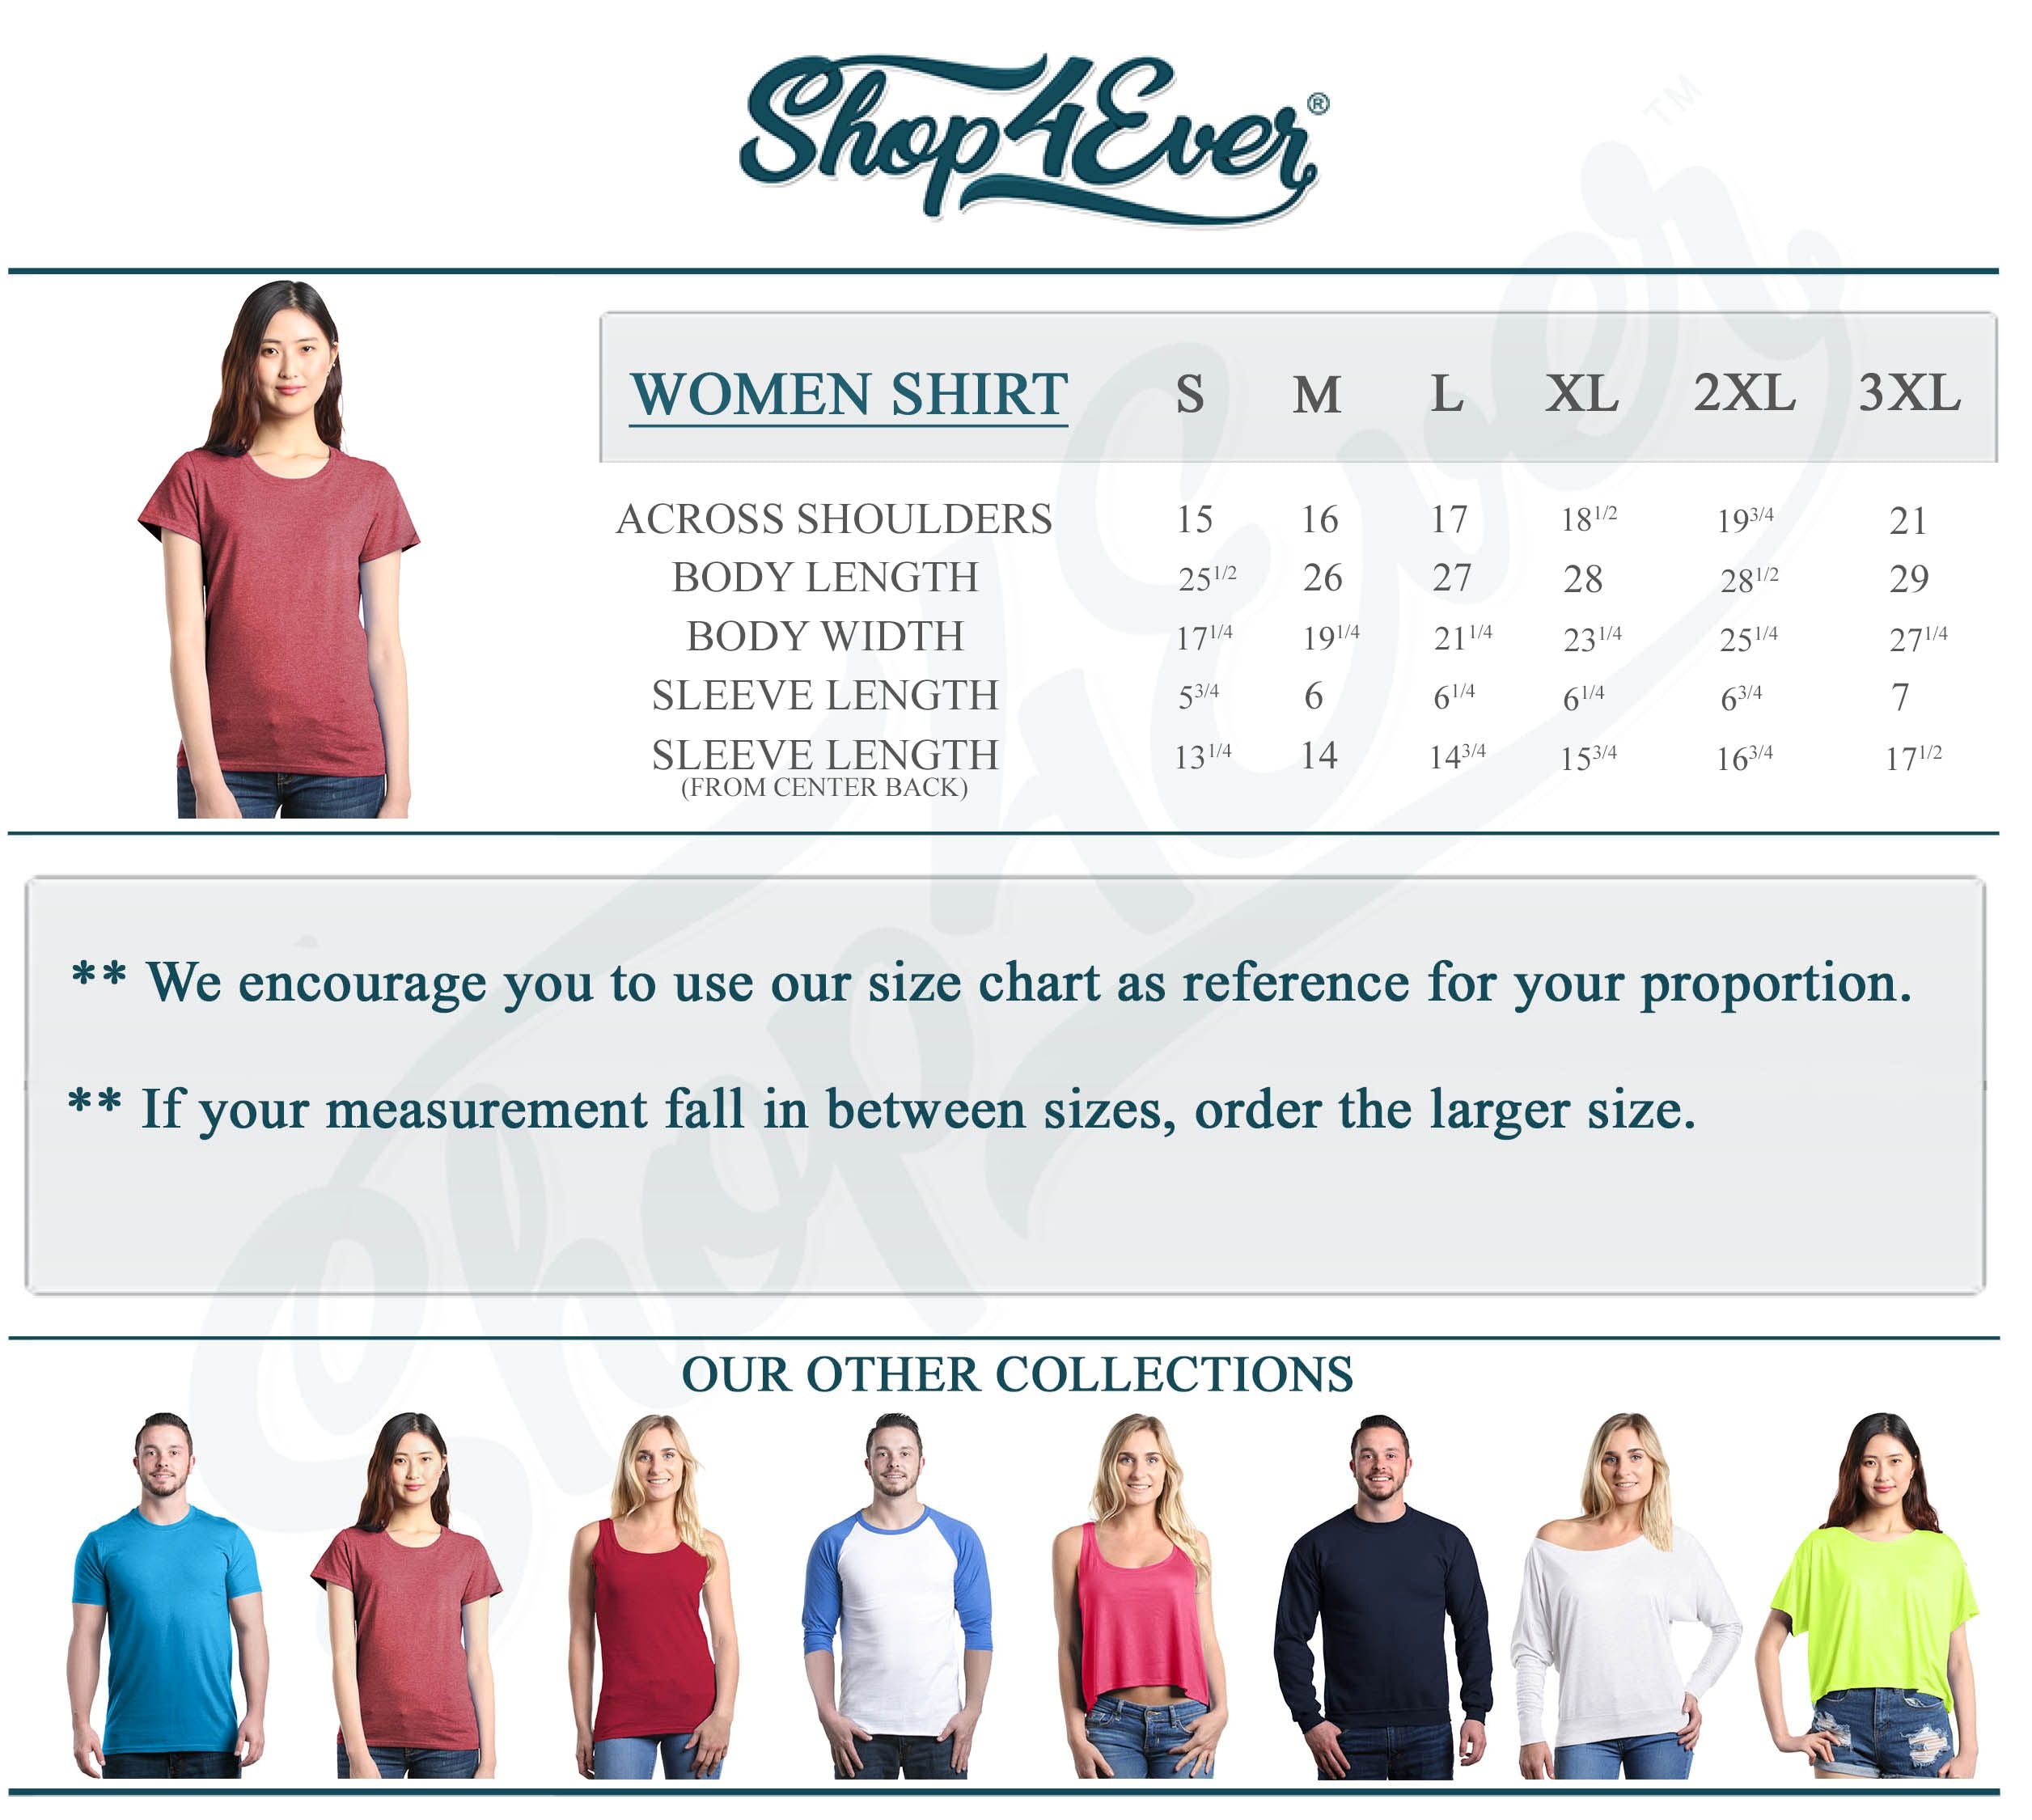 Green Shamrock Love Women's T-Shirt St. Patricks Day Shirts